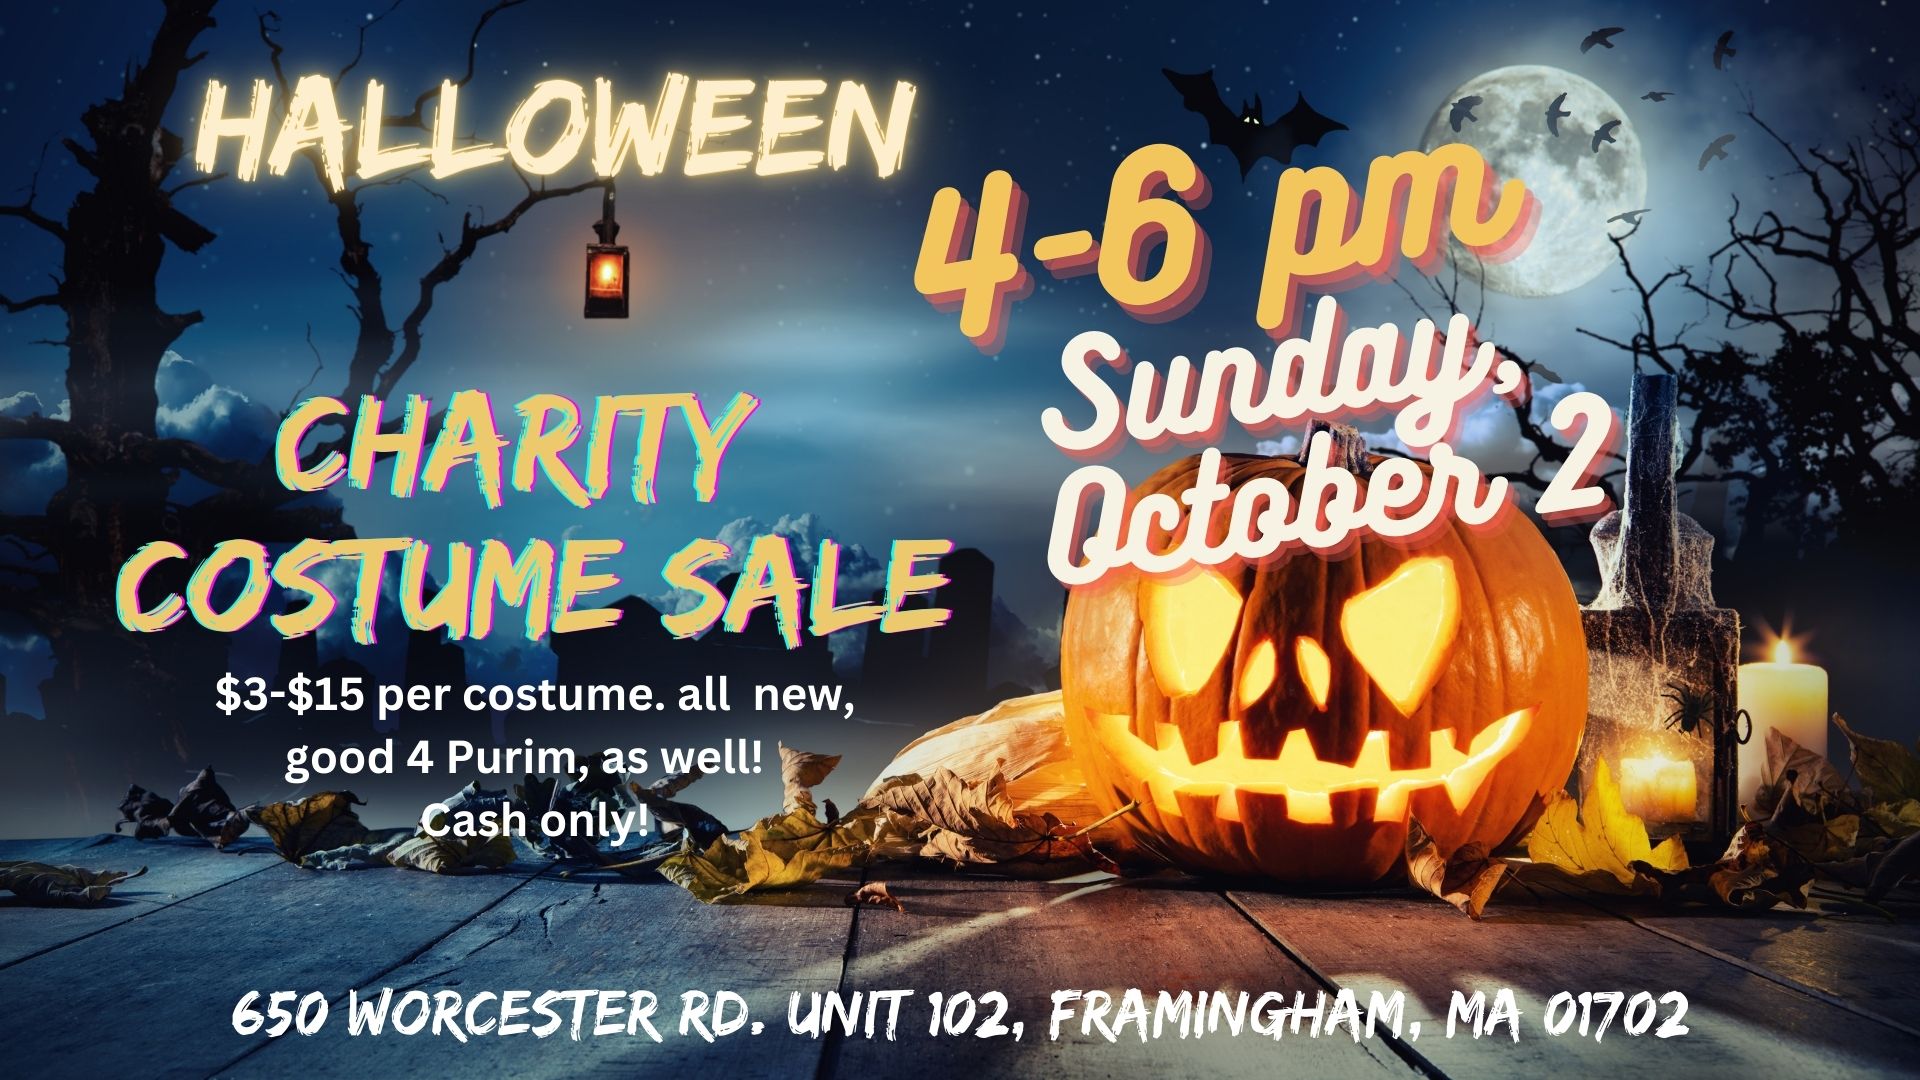 Halloween Charity Costume Sale